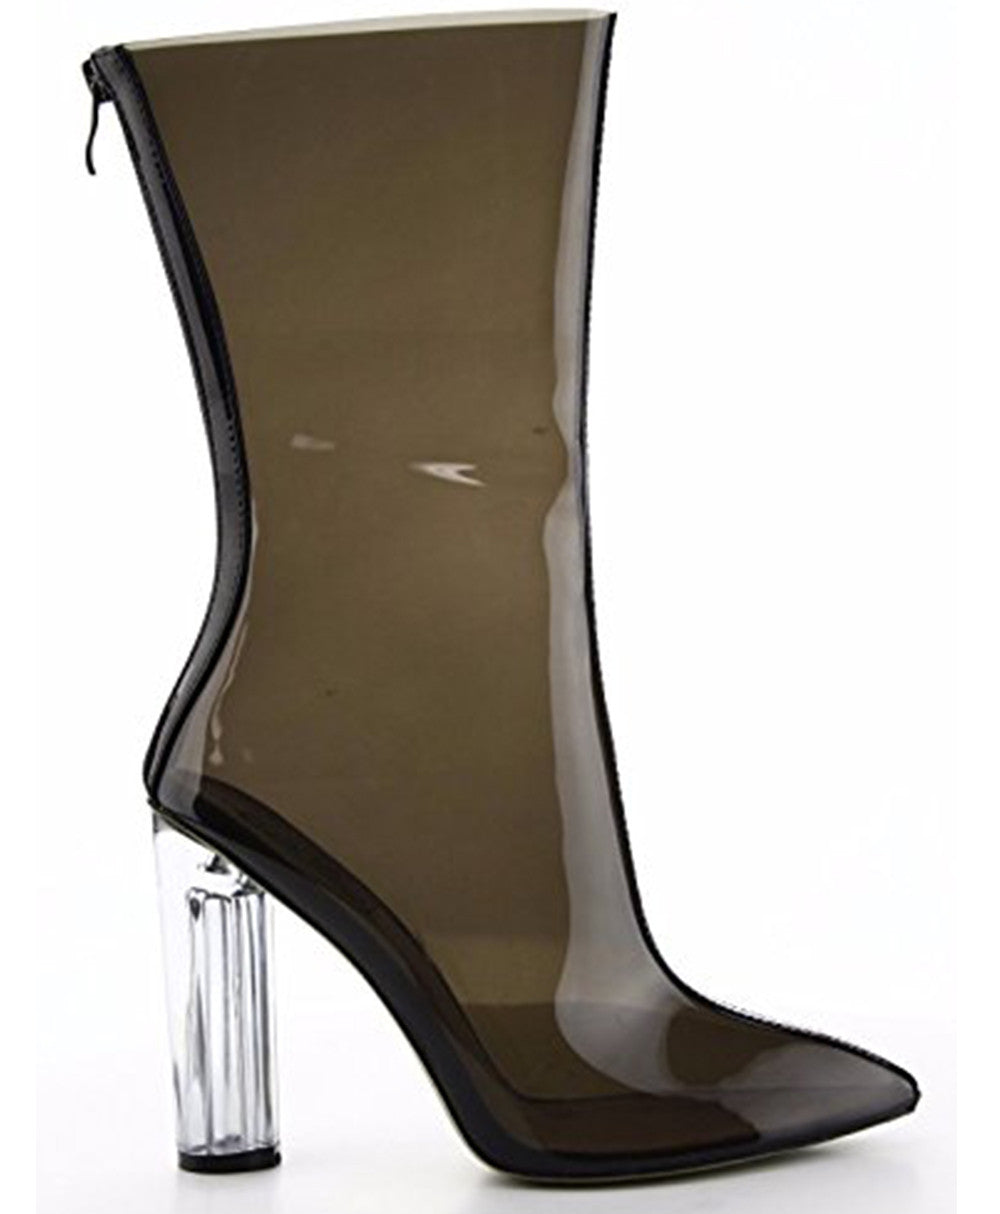 transparent heel boots